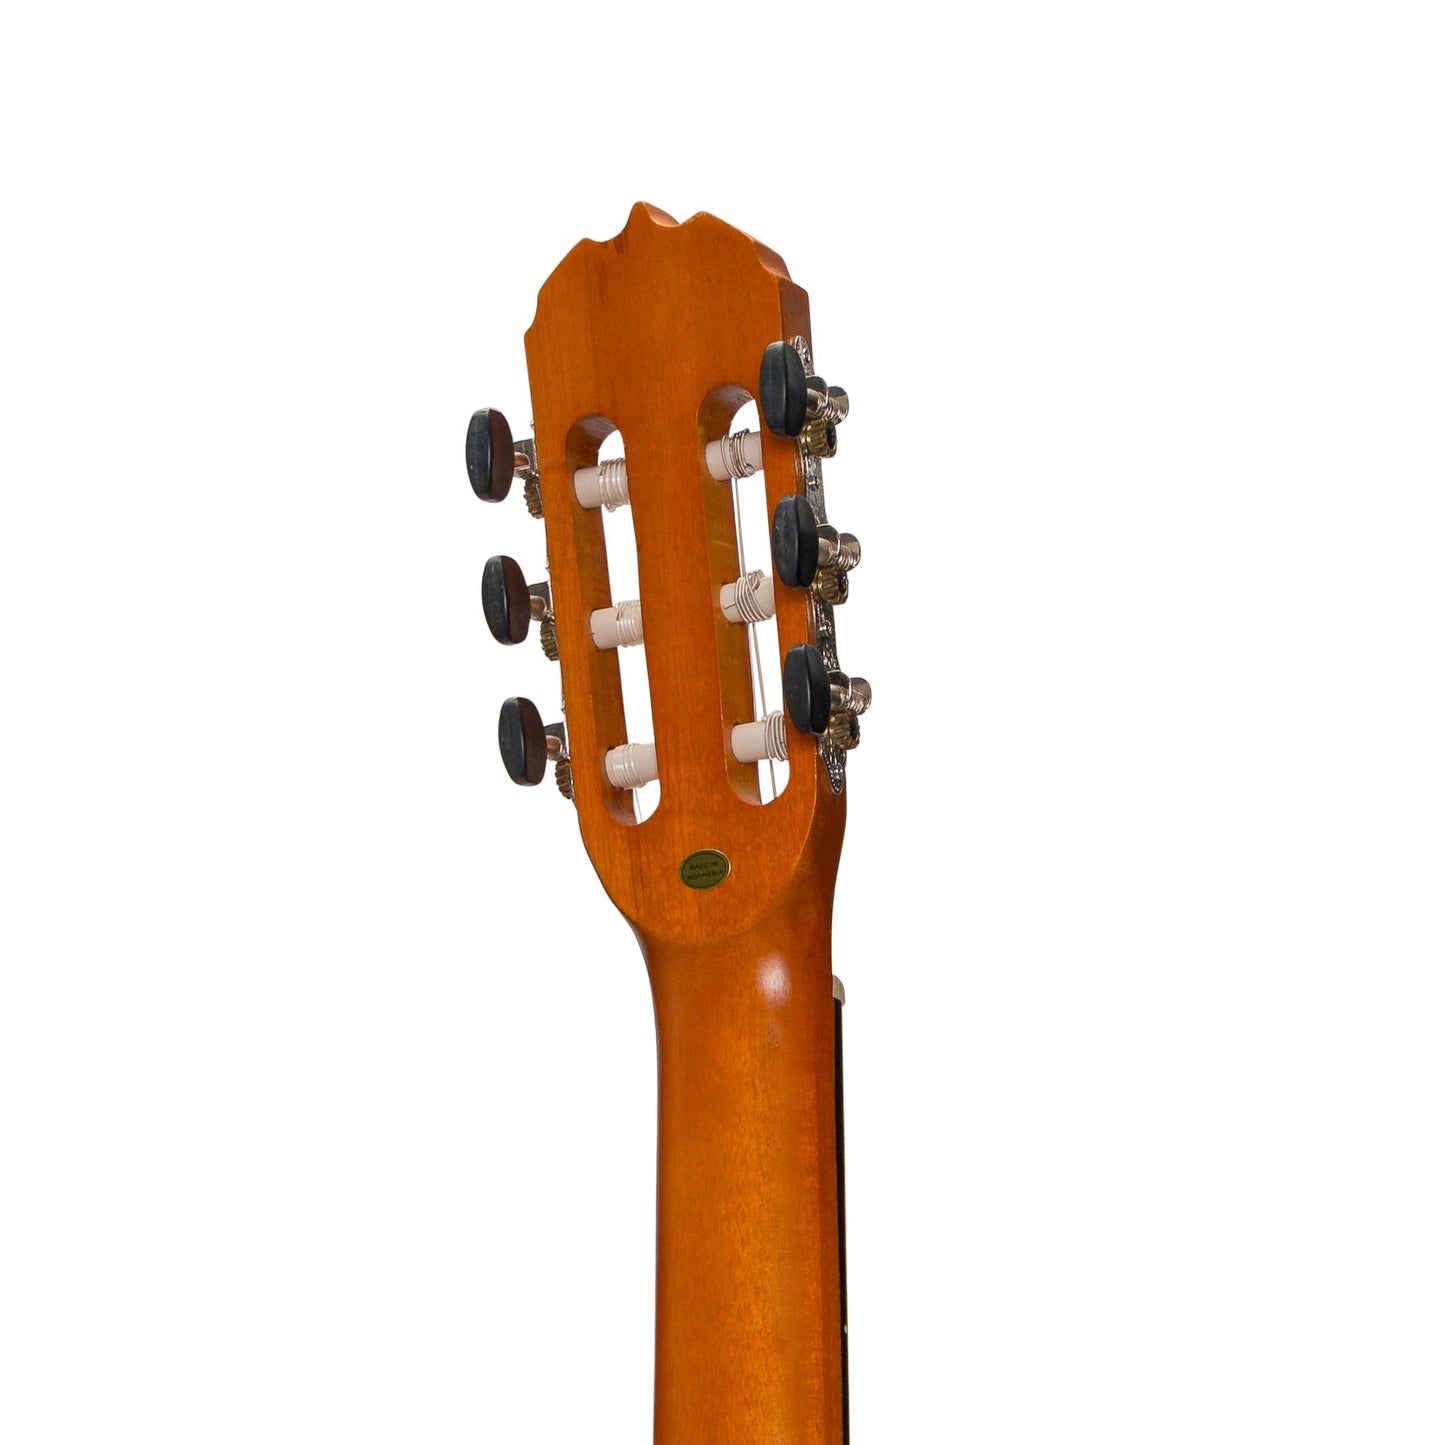 Sanchez Full Size Student Classical Guitar (Koa)